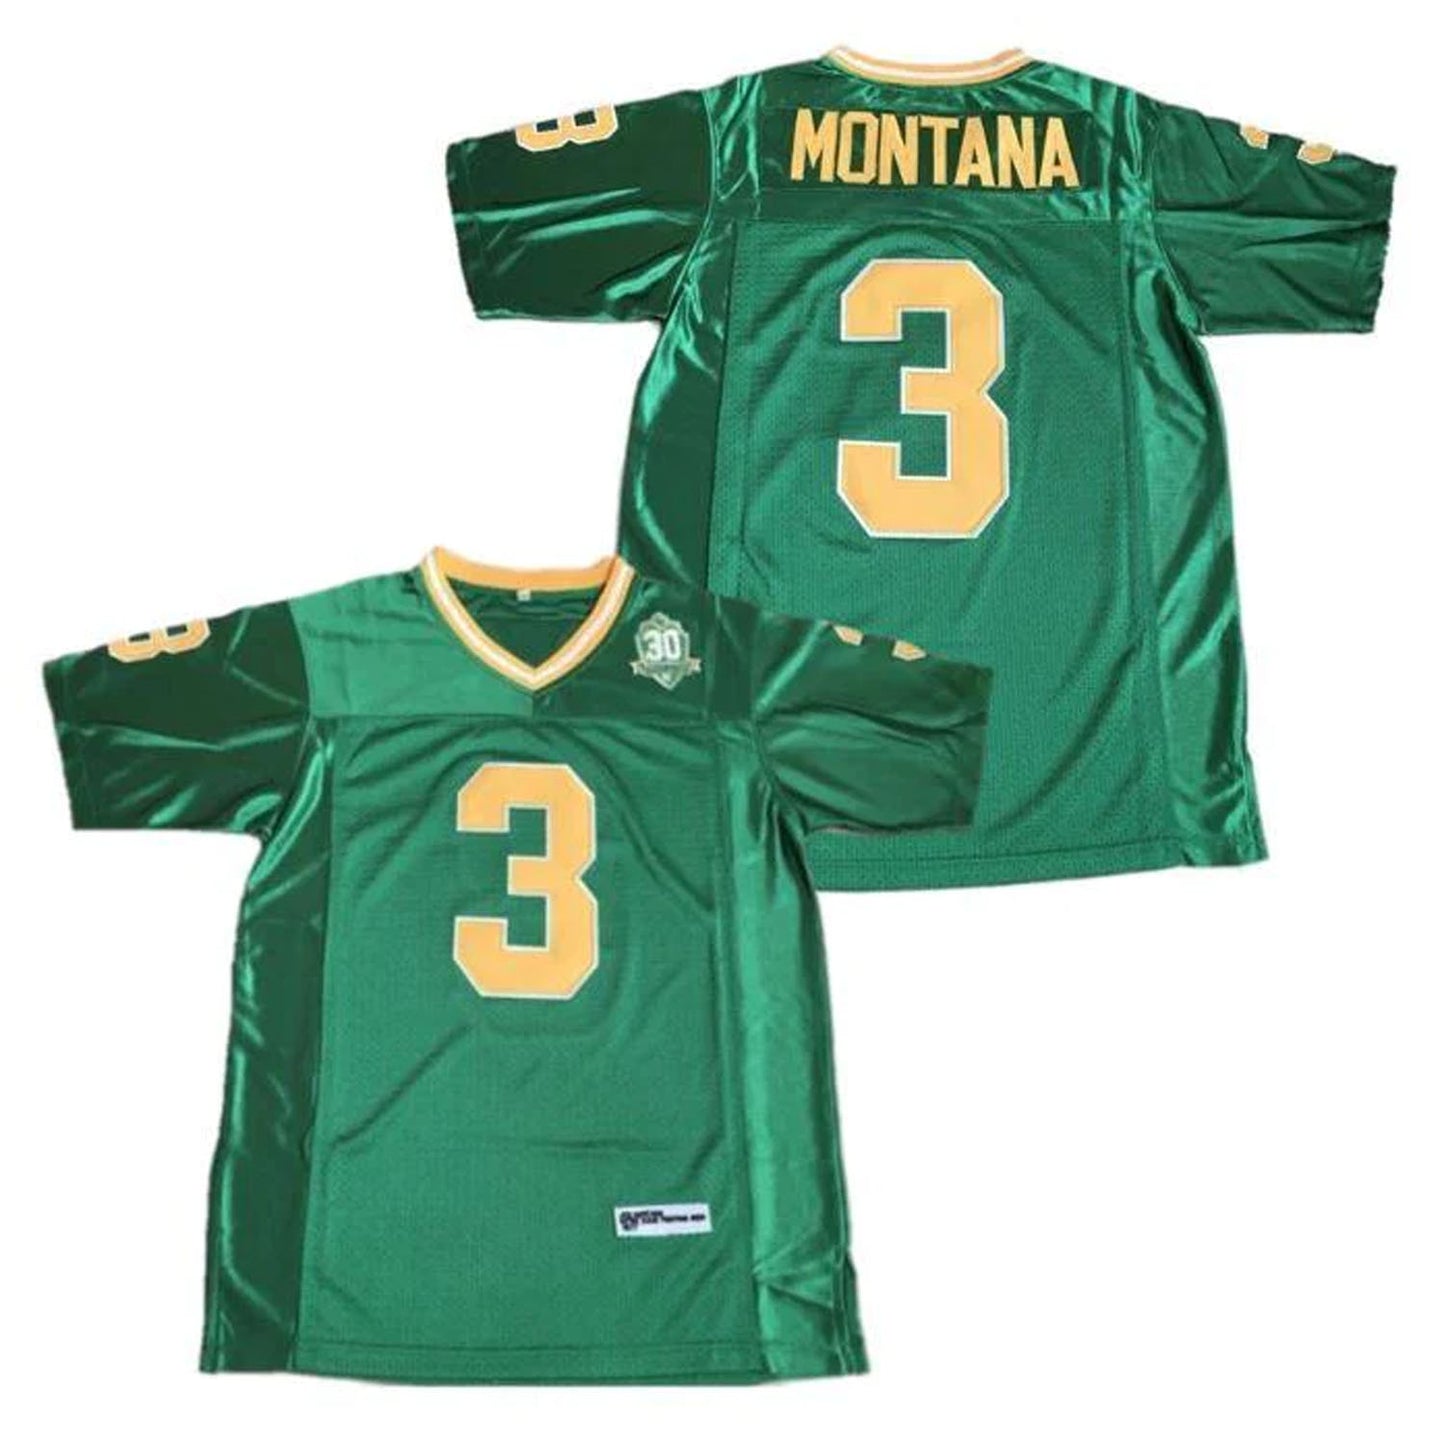 Joe Montana #3 Notre Dame Jersey